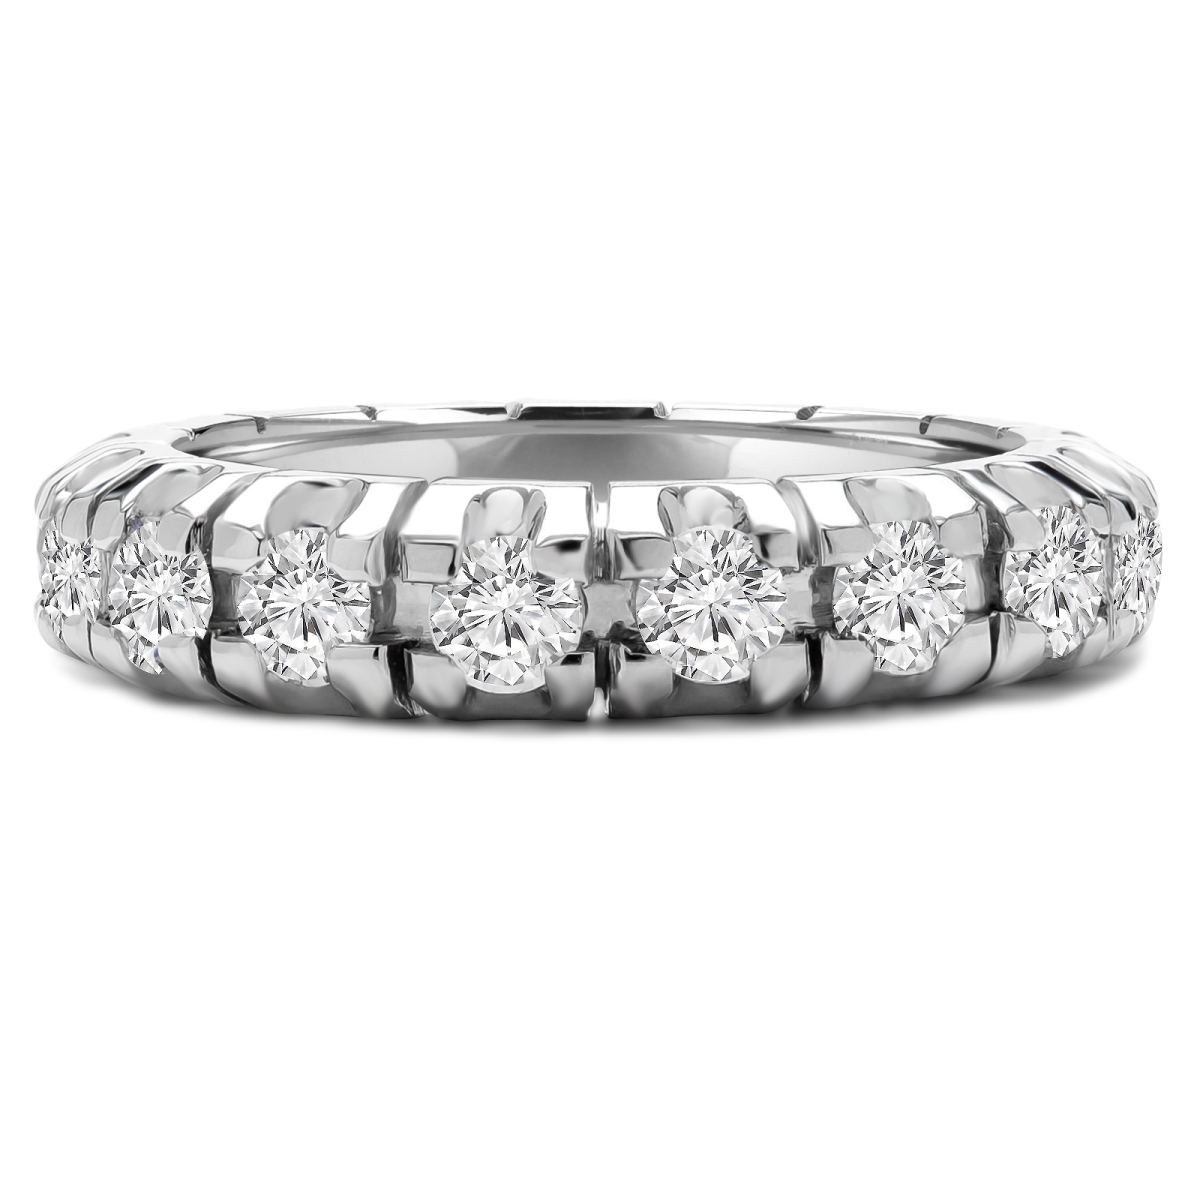 Majesty Diamonds MD210319-3 3.33 CTW Round Diamond Full-Eternity Anniversary Wedding Band Ring in 18K White Gold - Size 3